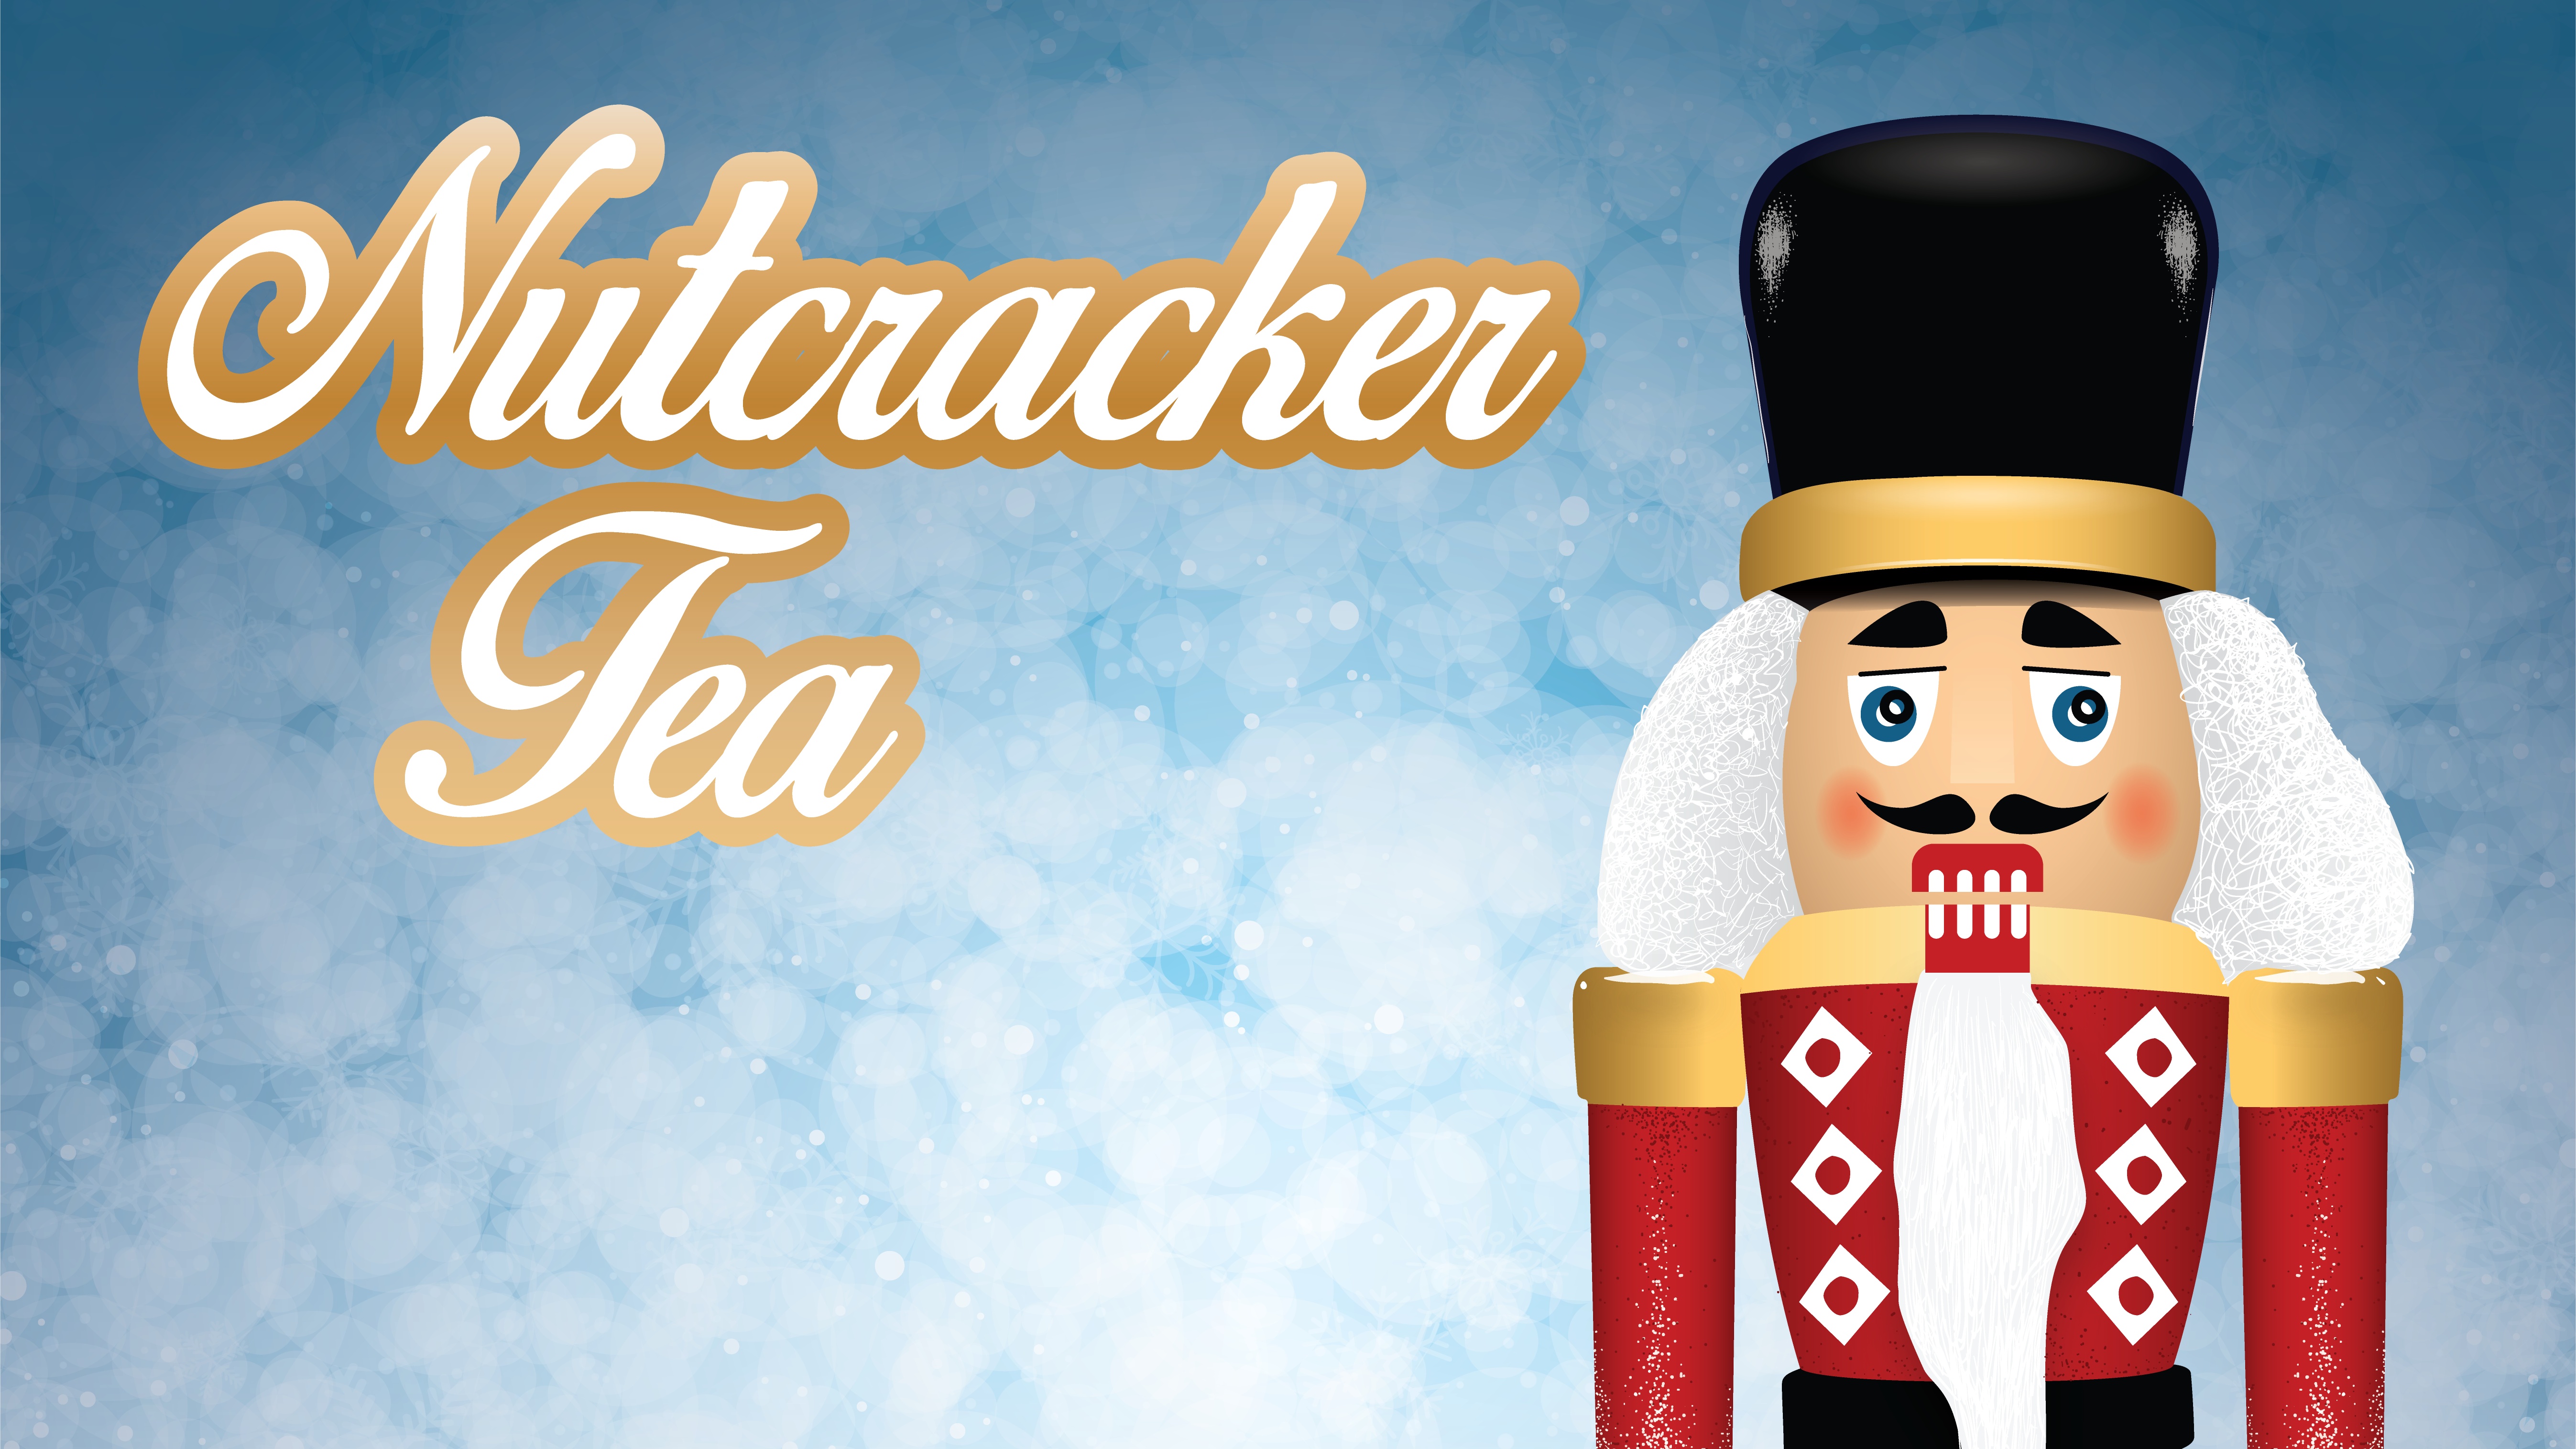 Nutcracker Tea SponsorMyEvent